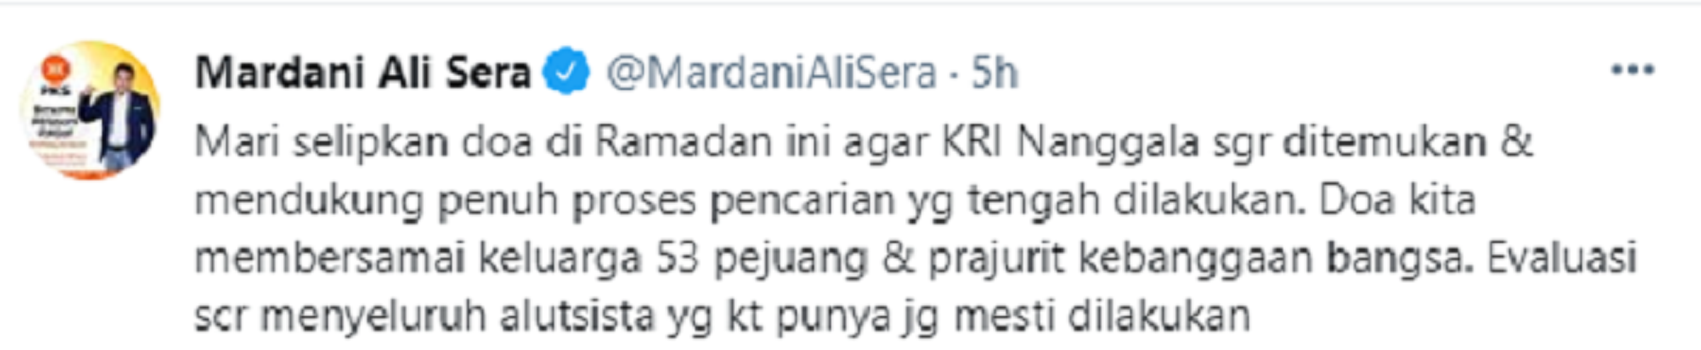 Mardani Ali Sera meminta untuk mengavulasi alitsista usai kapal selama KRI Nanggala 402 dikabarkan hilang konak, Rabu, 21 April 2021.*